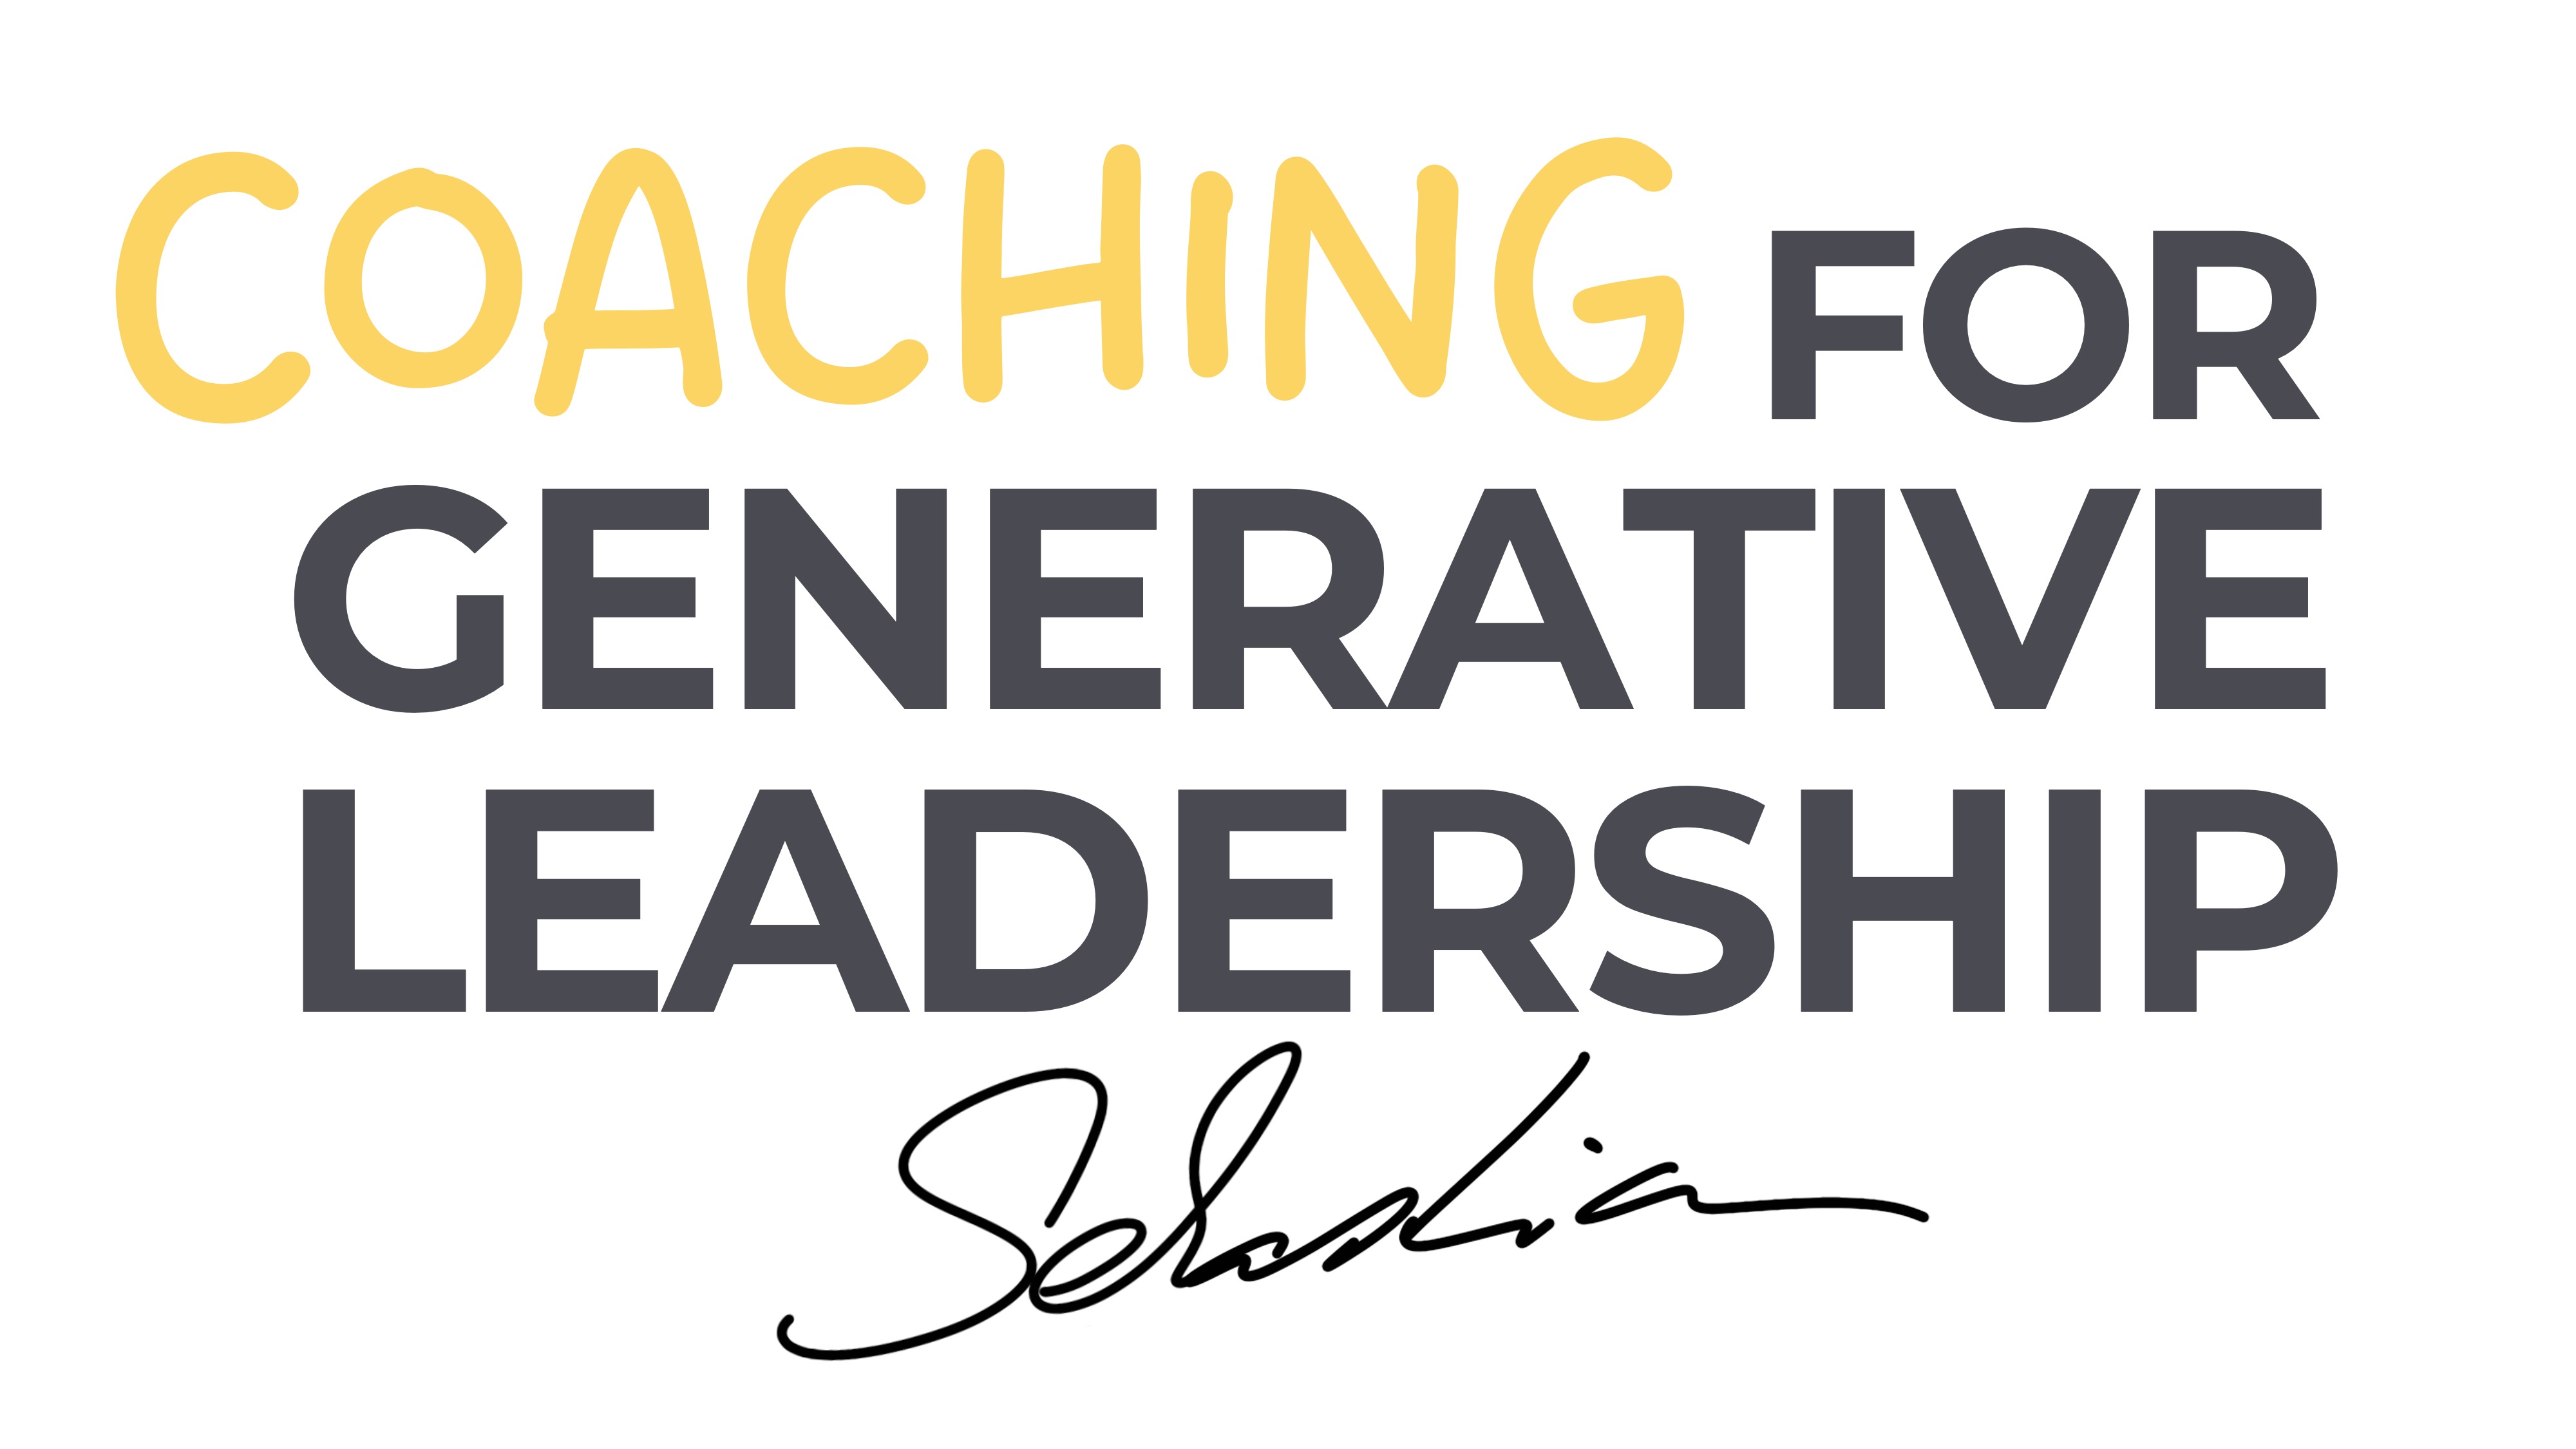 Sebastian Schick Coaching for Generative Leadership